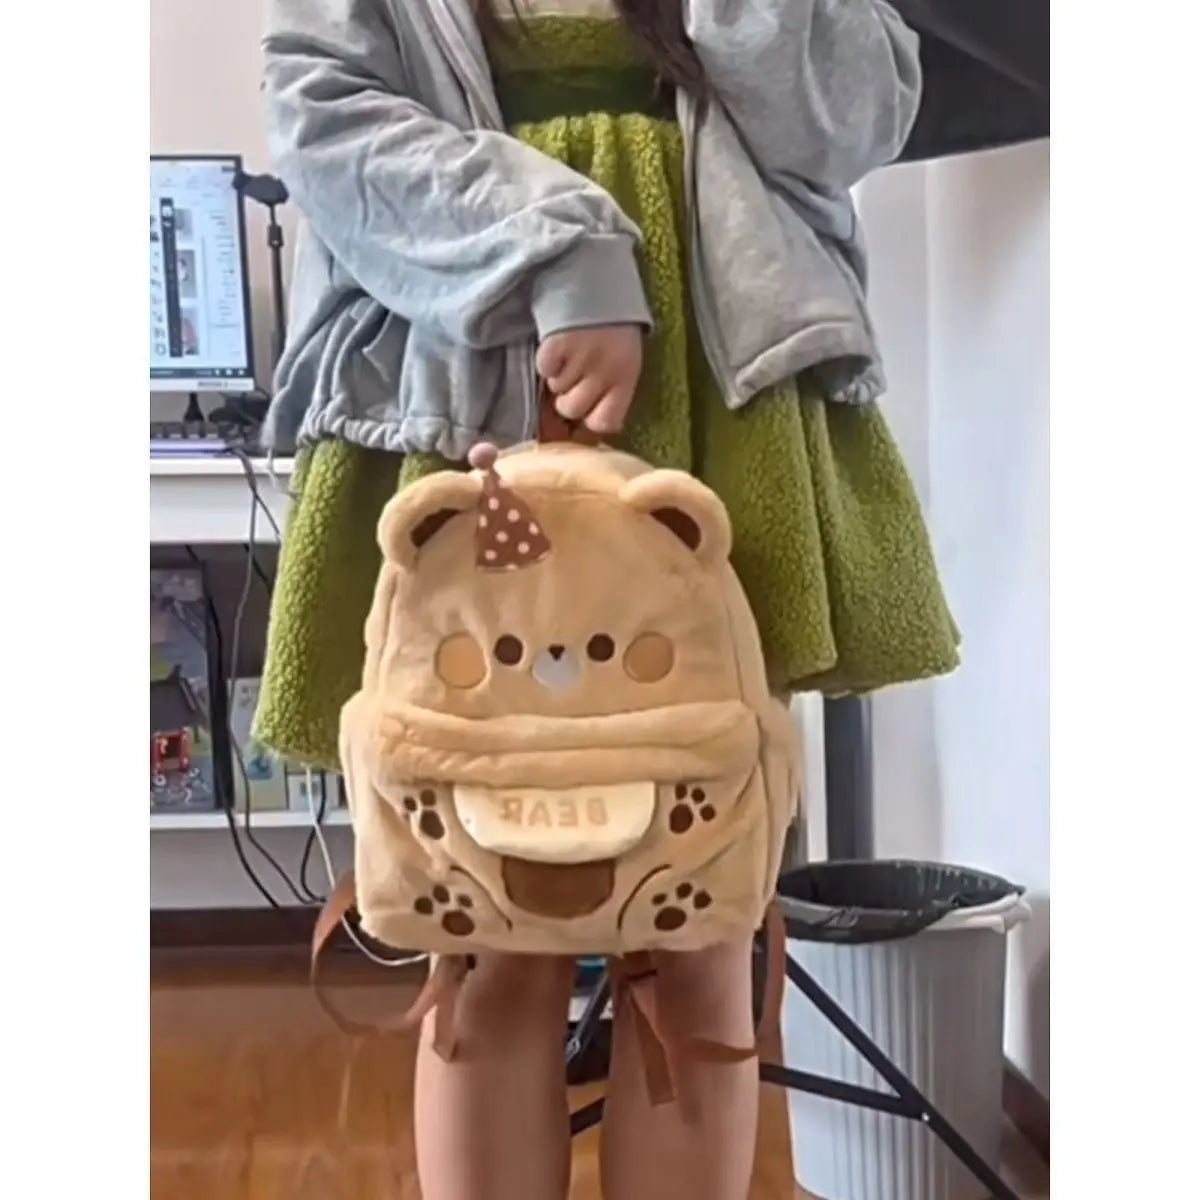 Sweet Plush Brown Bear Backpack